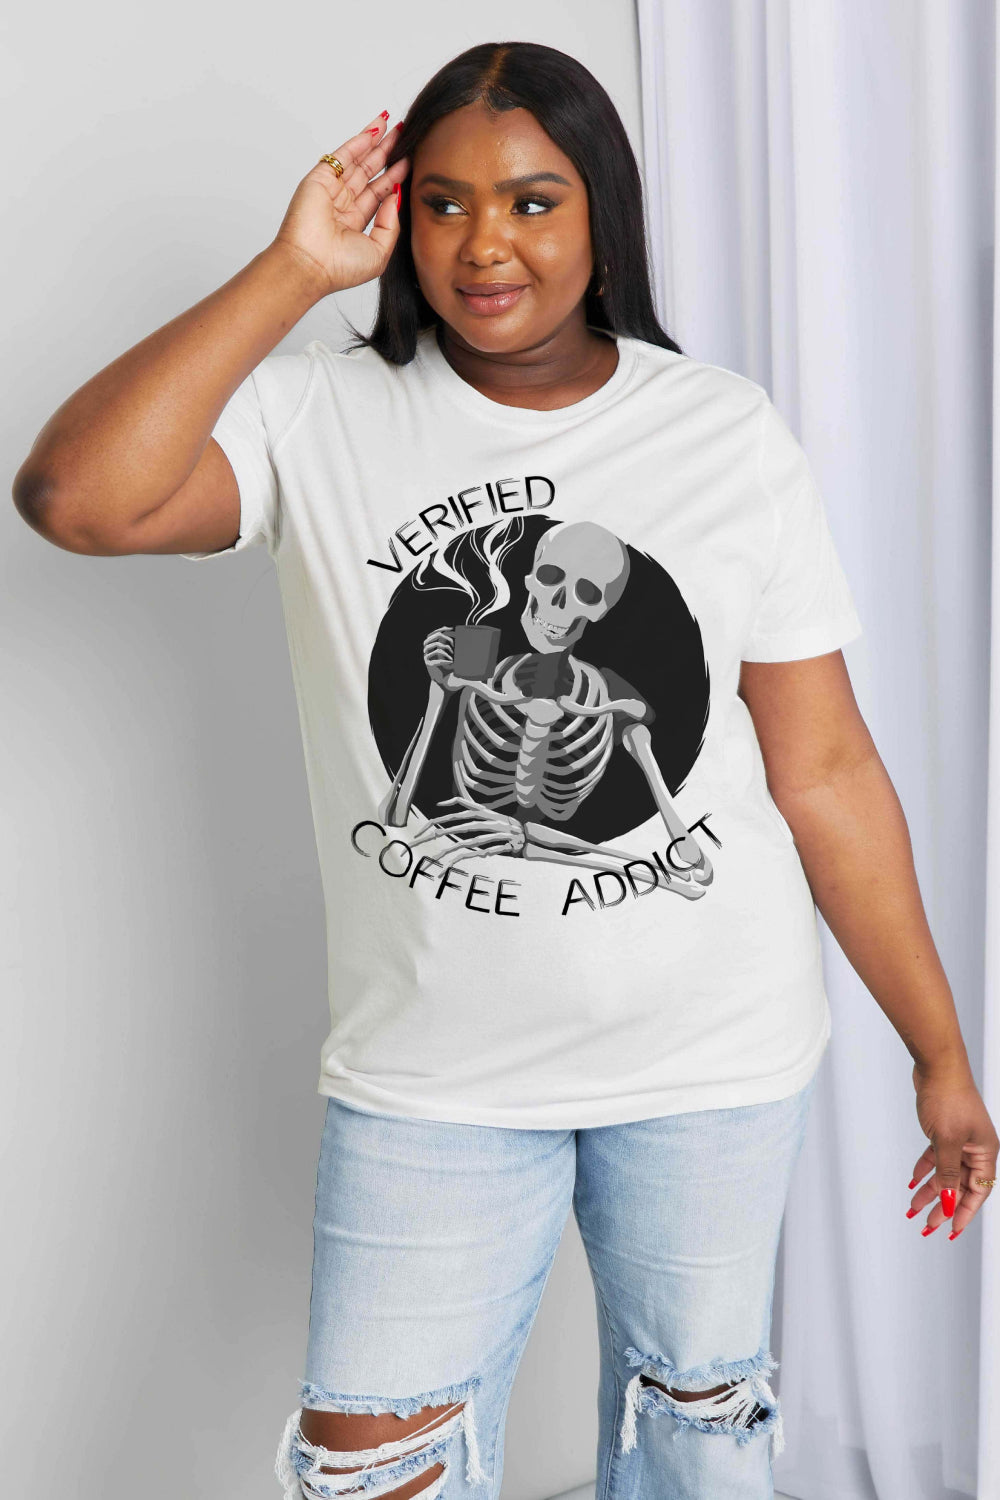 Women's Verified Coffee Addict Graphic Cotton Tee